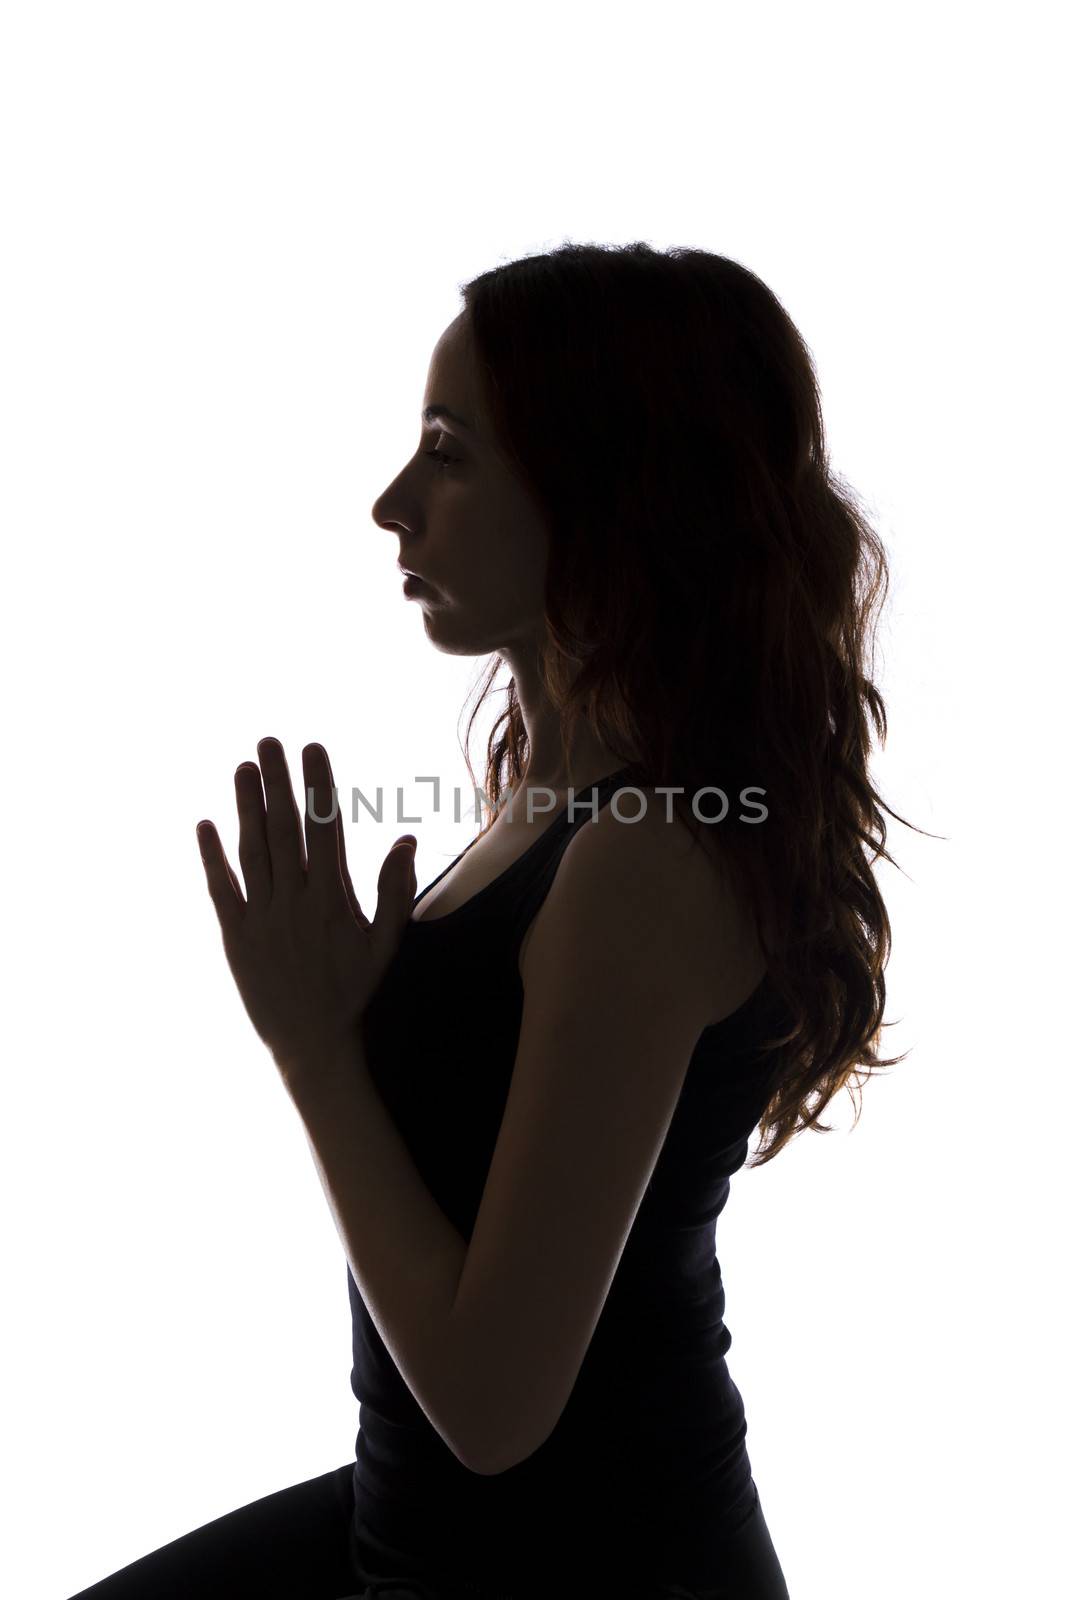 Woman in meditation, silhouette by snowwhite